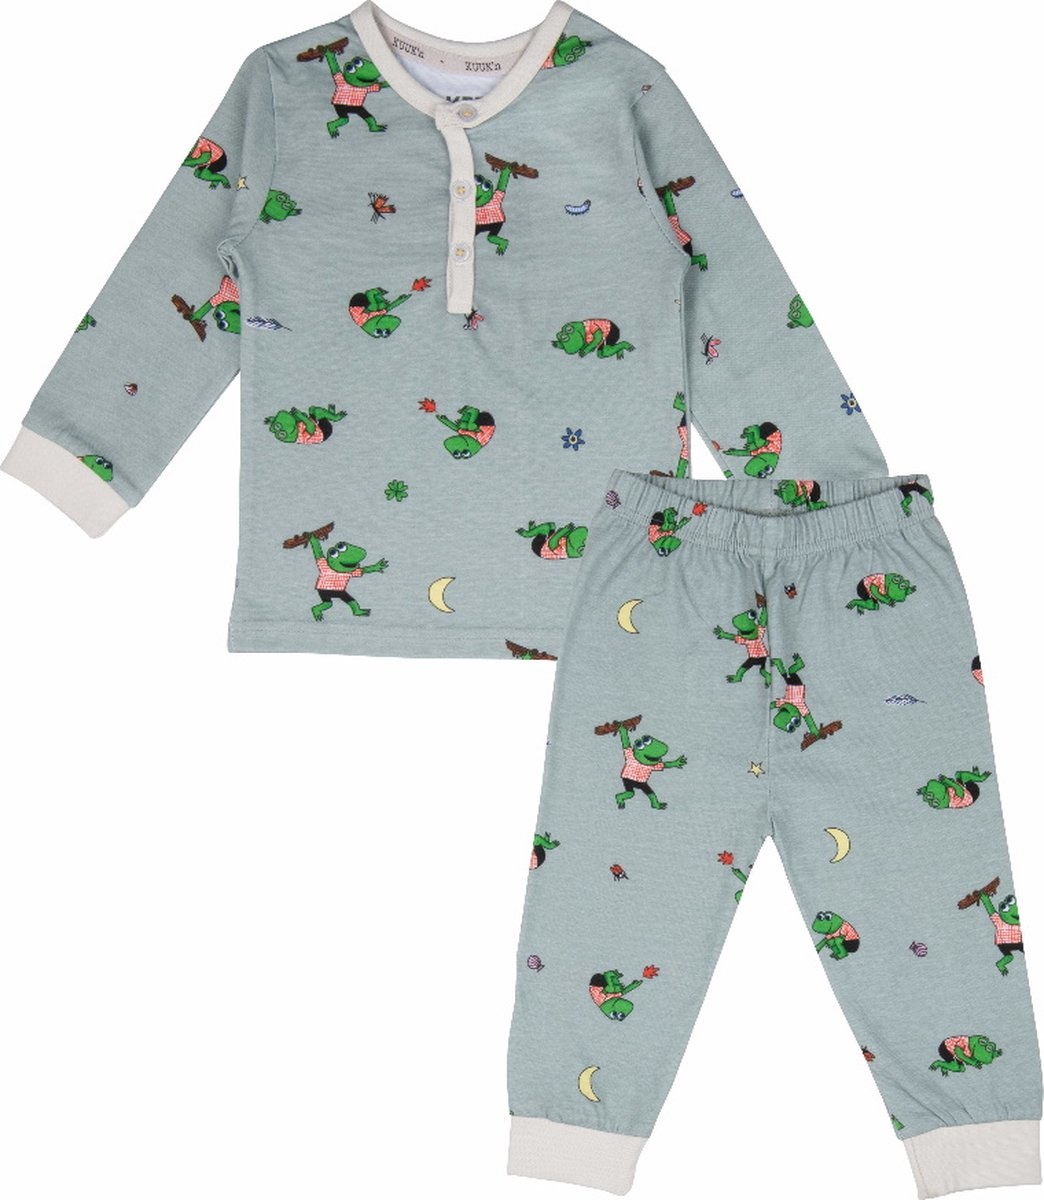 Knipoog Extra strip Kuuk'n Kees All-Over Pyjama maat 74/80 2020461 | Best Deals Online BV